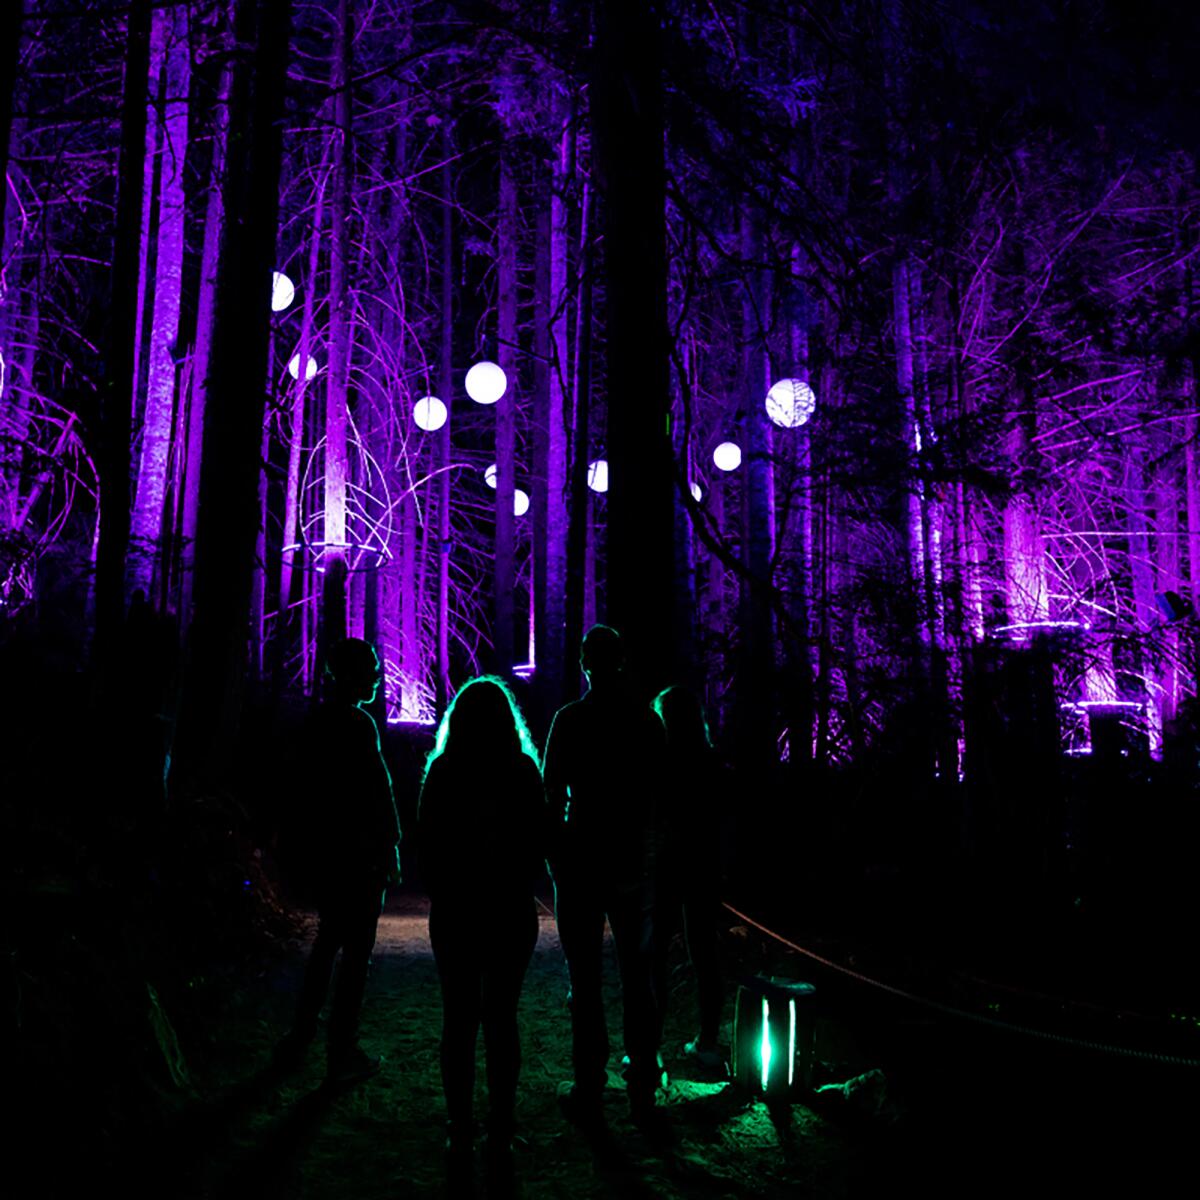 Tall narrow trees are illuminated with purple light.